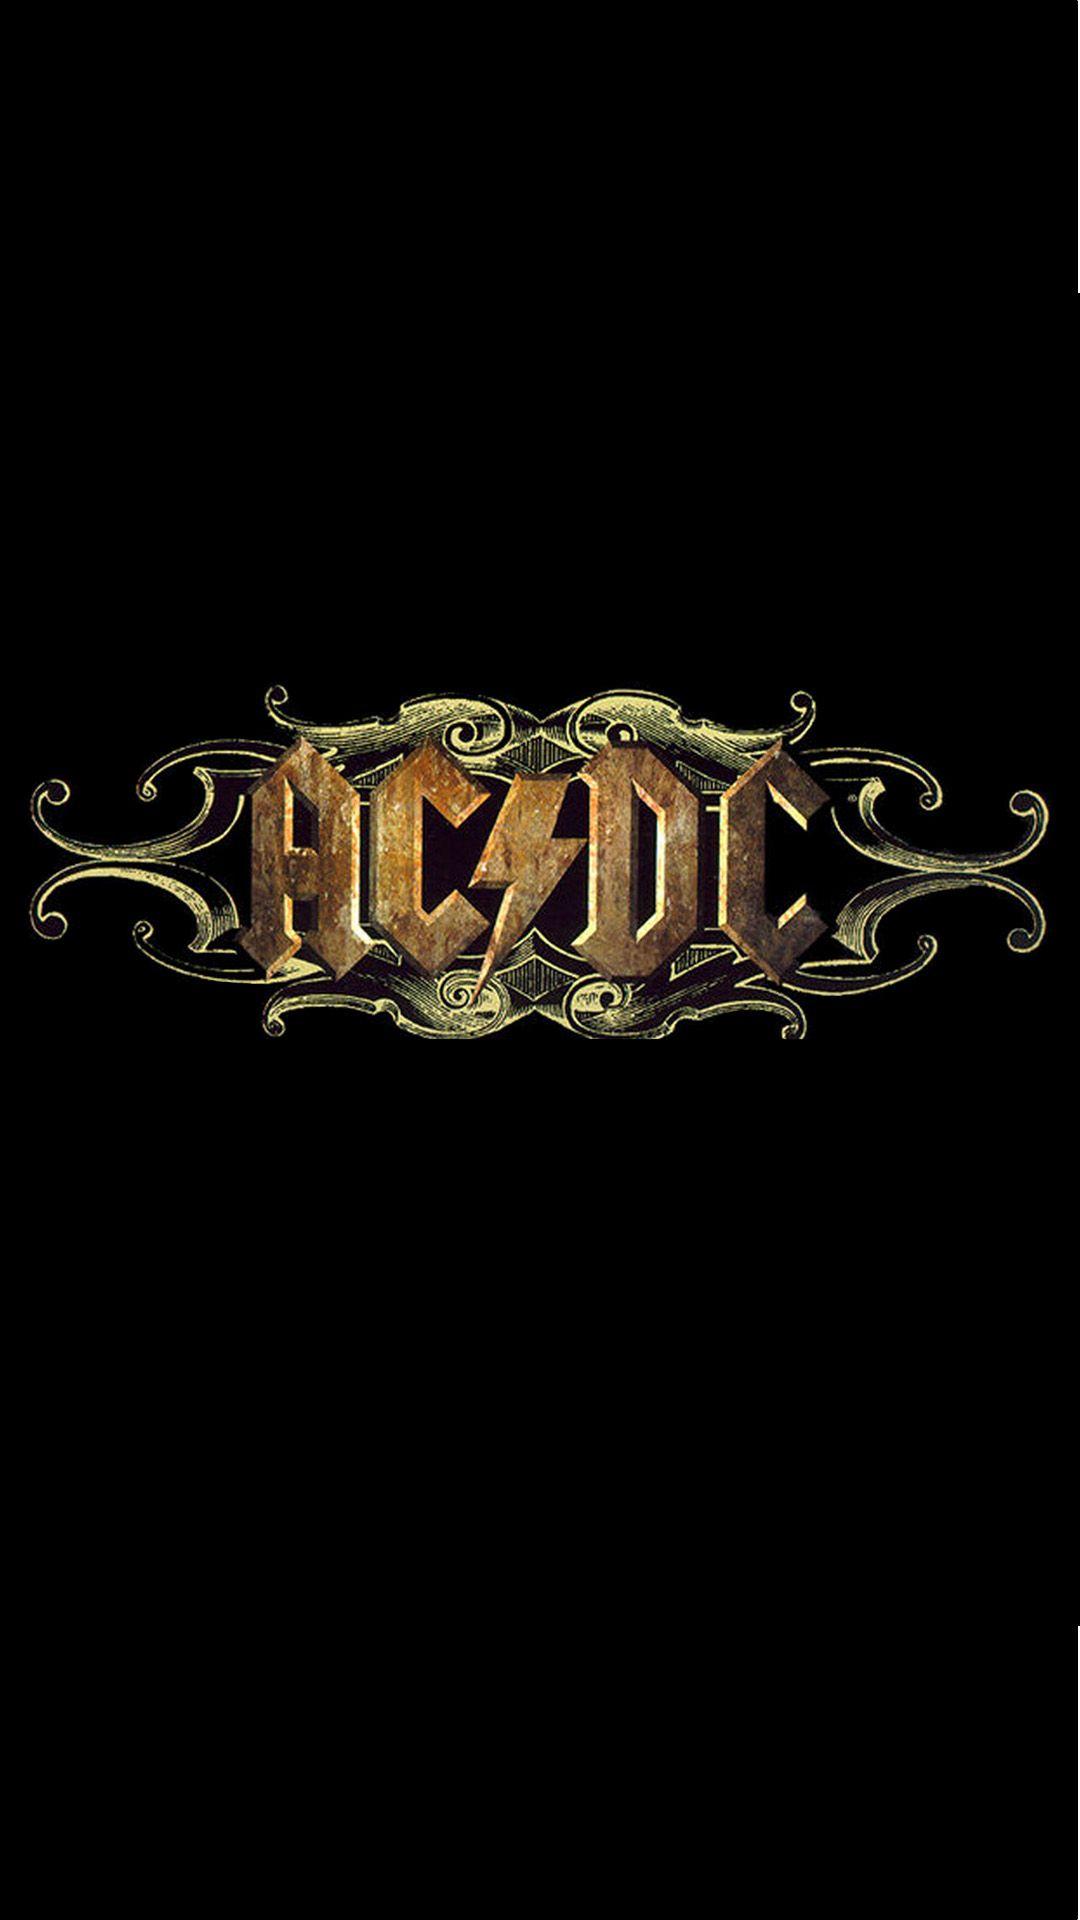 Band Logo Wallpaper